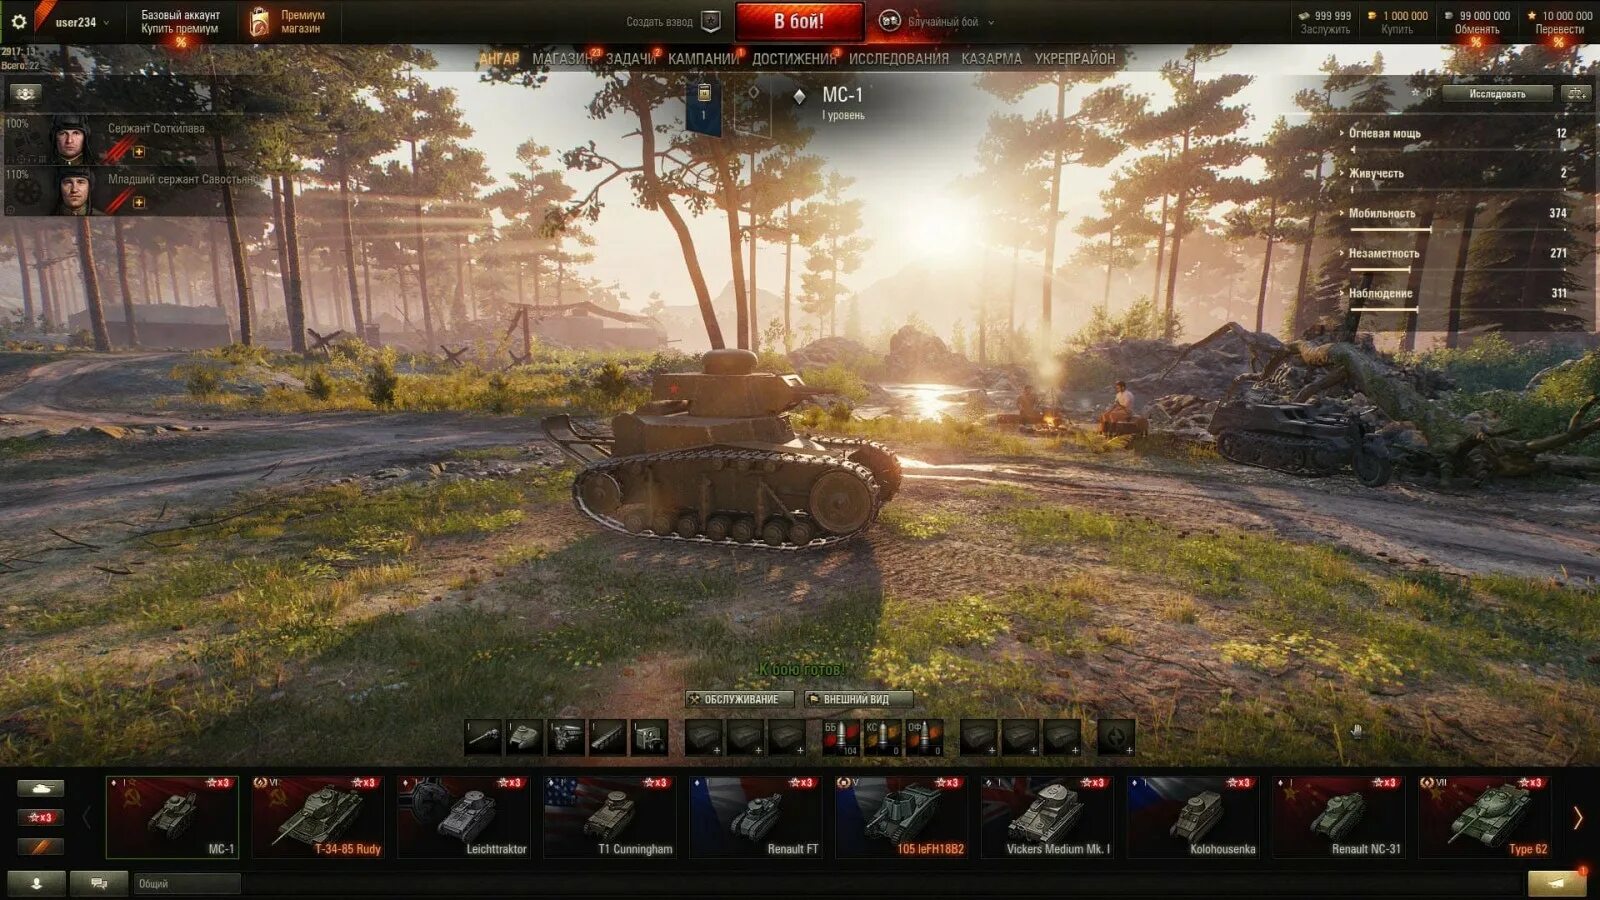 Танки новый аккаунт. Скриншот Ангара World of Tanks. Ворлд оф танк 1.0 Графика. World of Tanks скрины боя. Ангар 0.9.14 WOT.